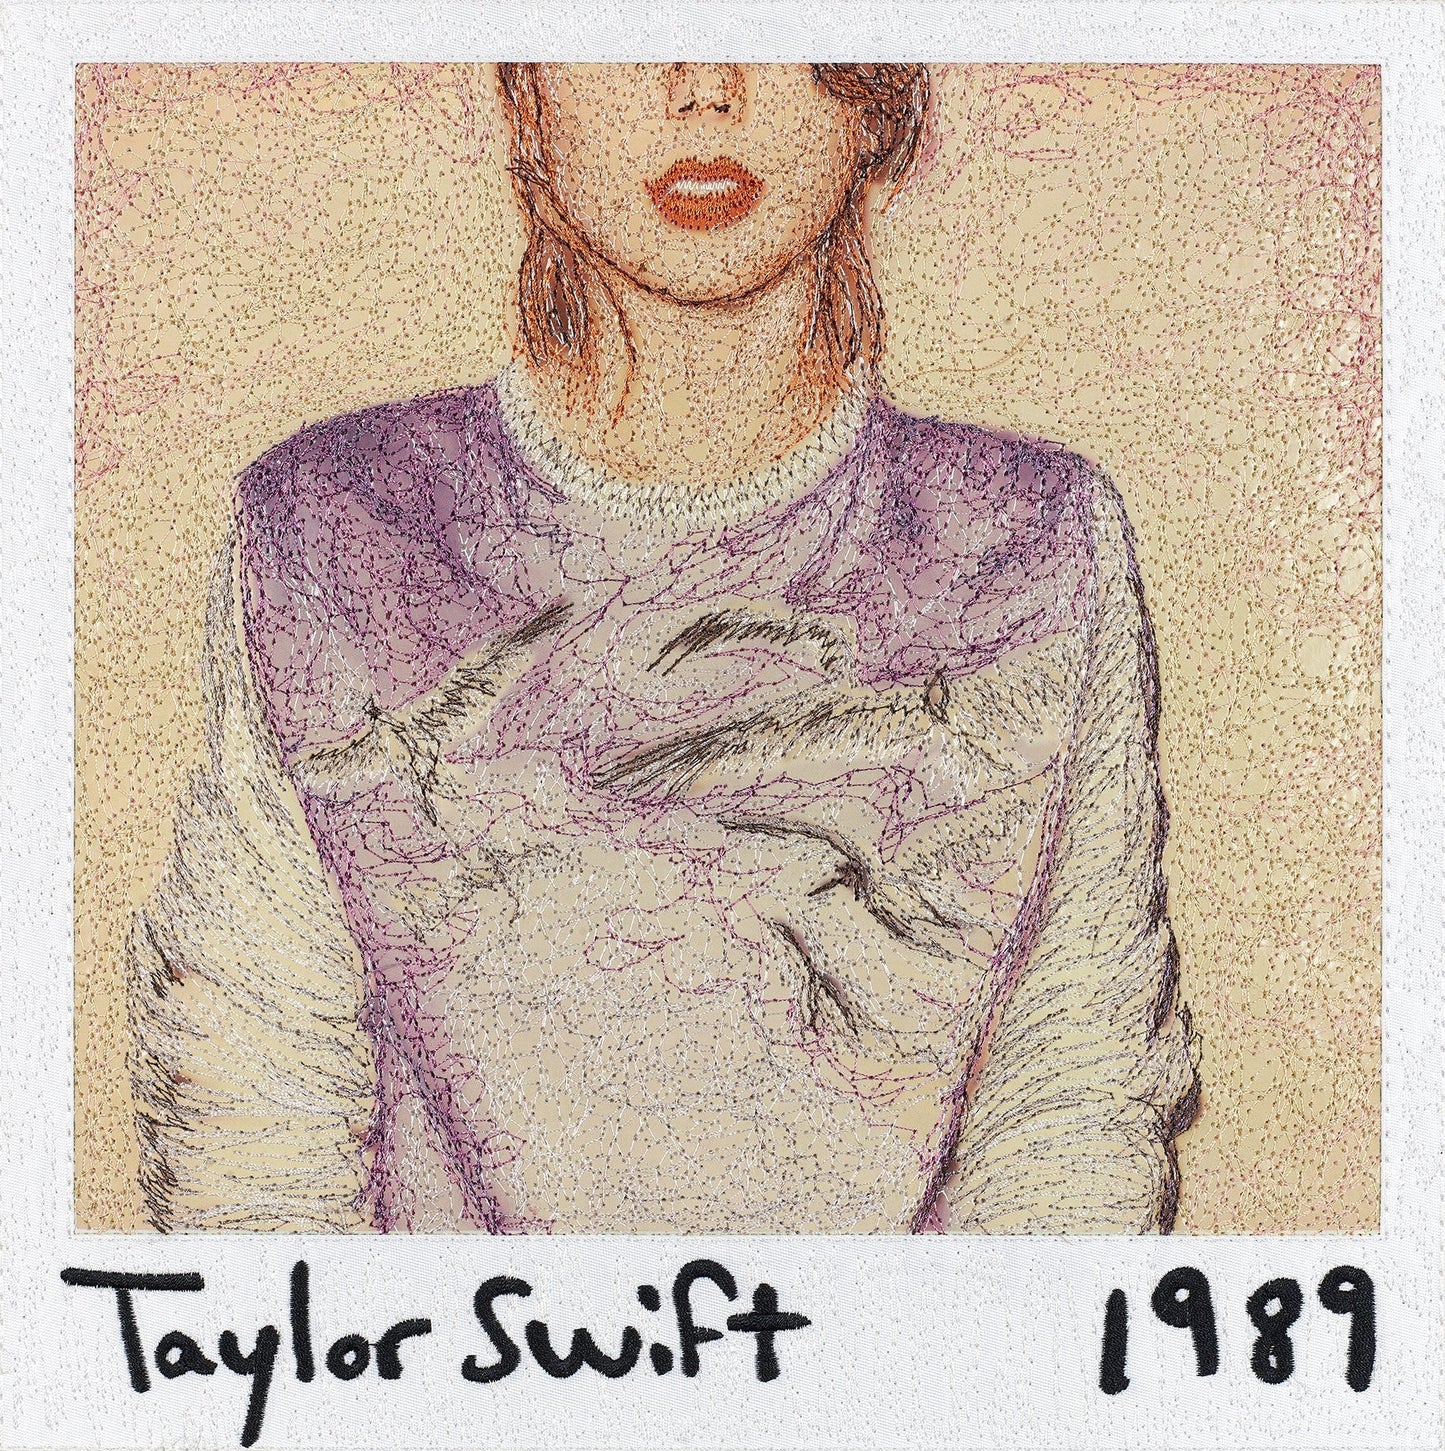 Taylor Swift 1989 12x12